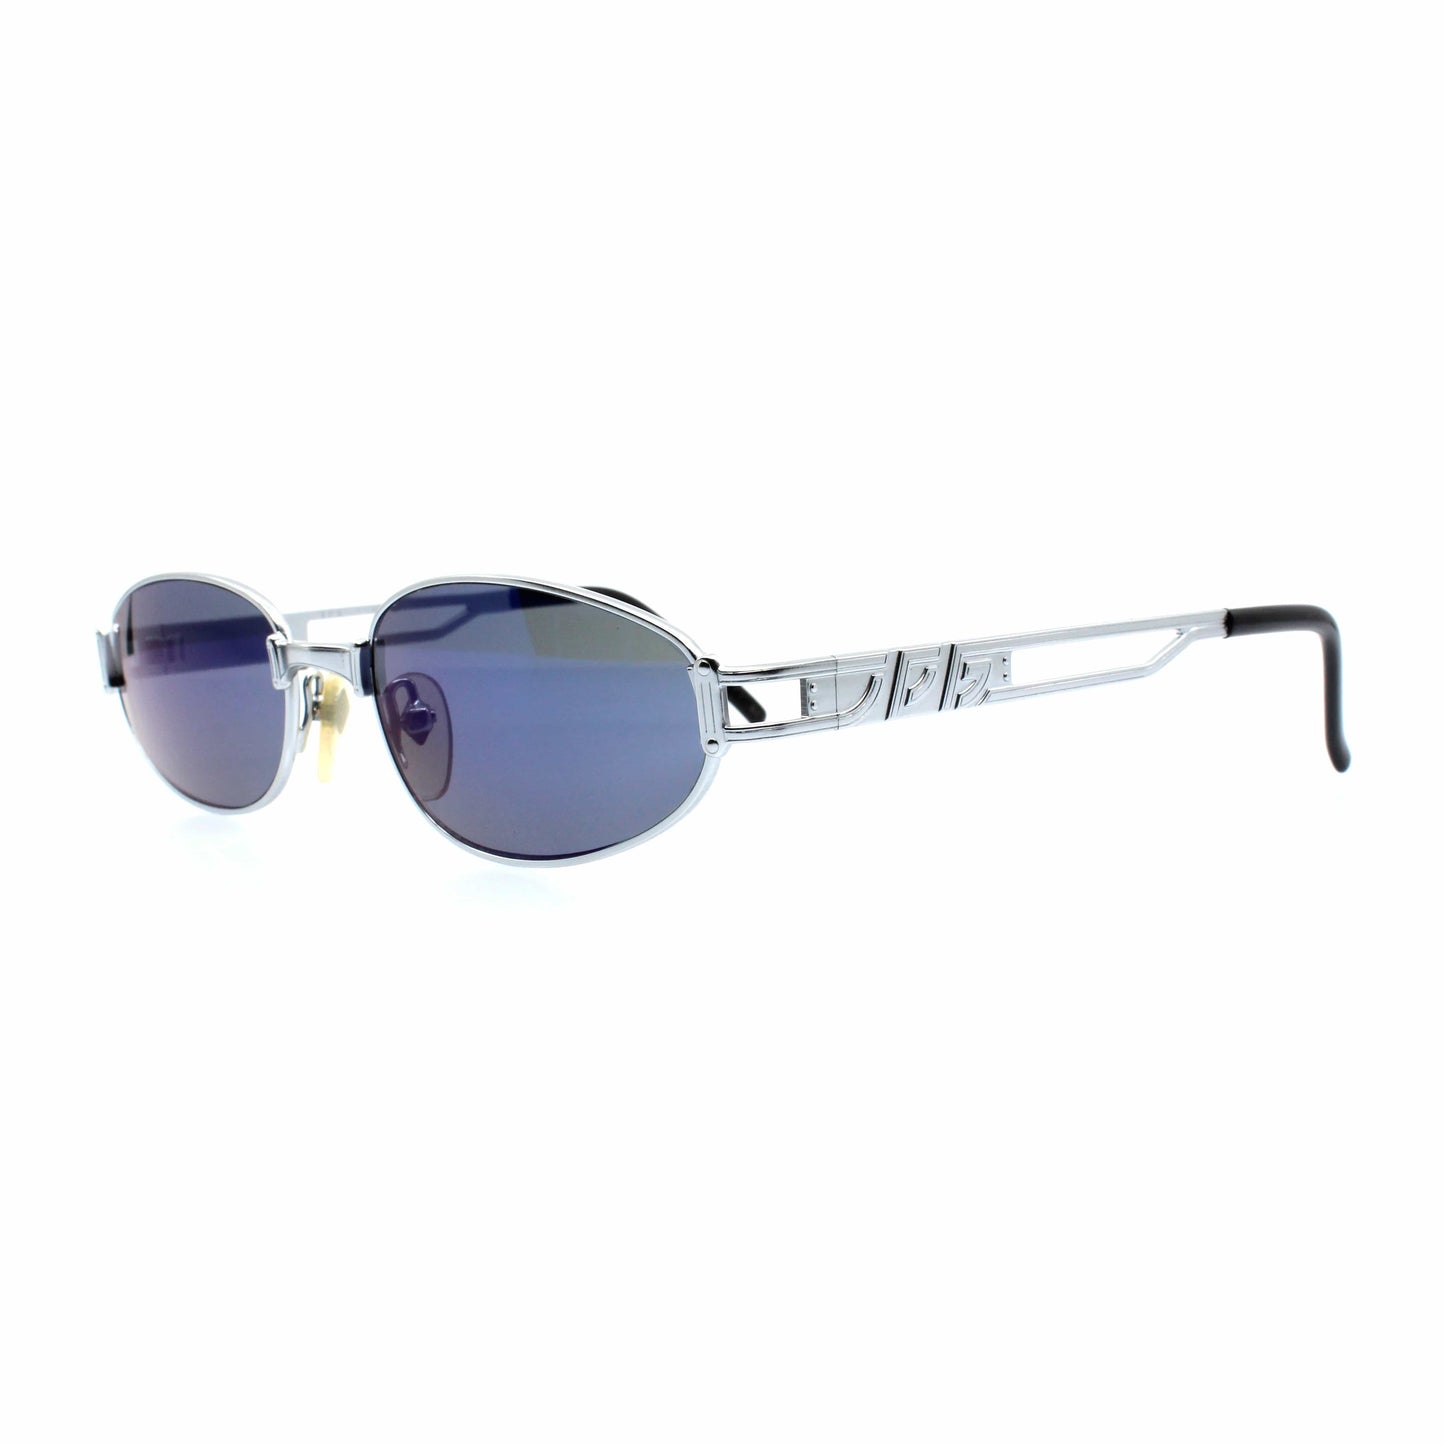 Silver Vintage Jean Paul Gaultier 58-6108 Sunglasses RSTKD Vintage